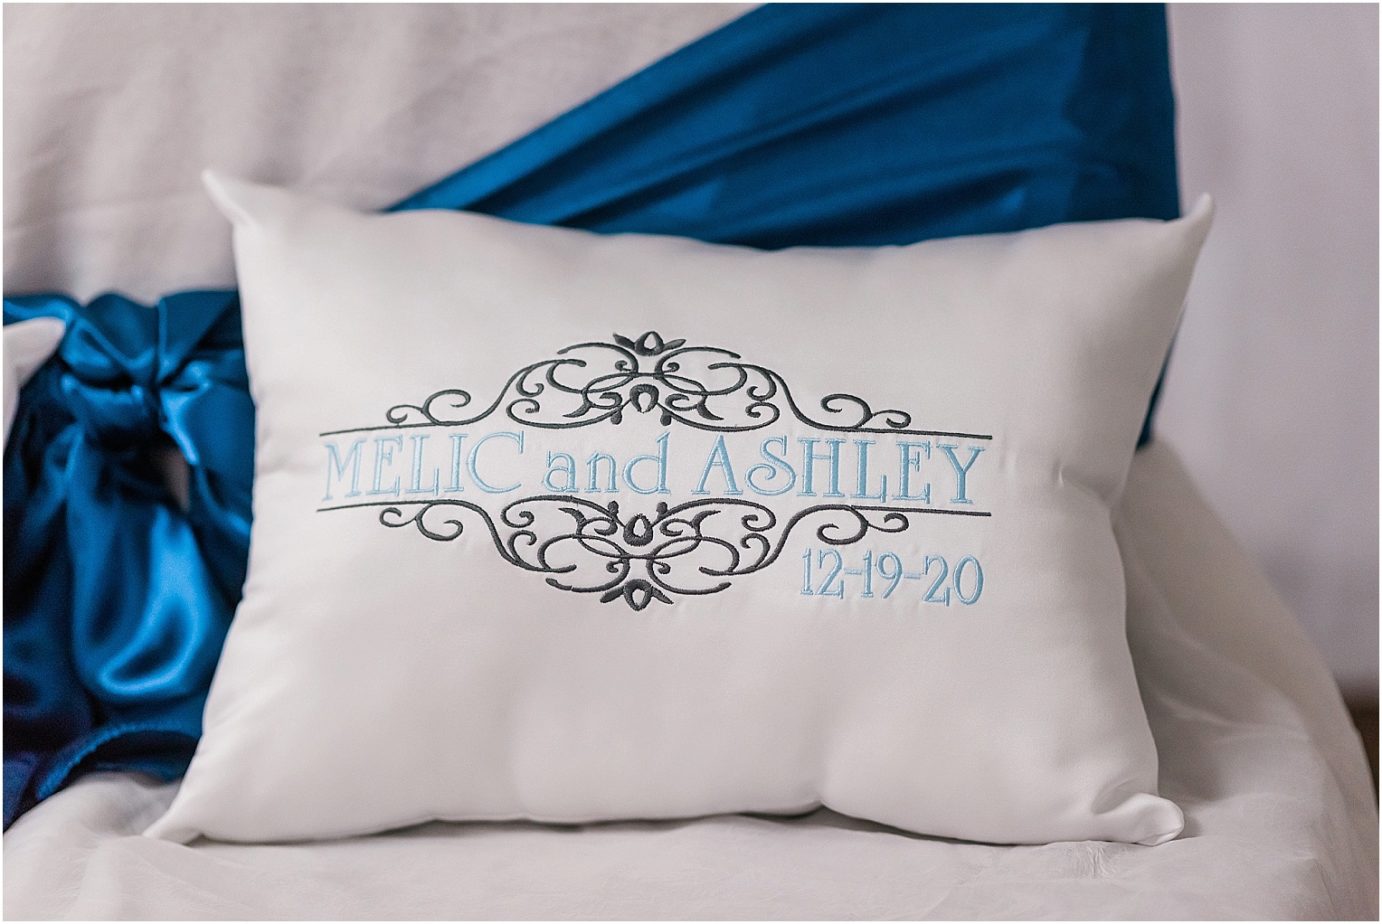 Intimate church wedding othello wa Melic and ashley pillows for kneeling